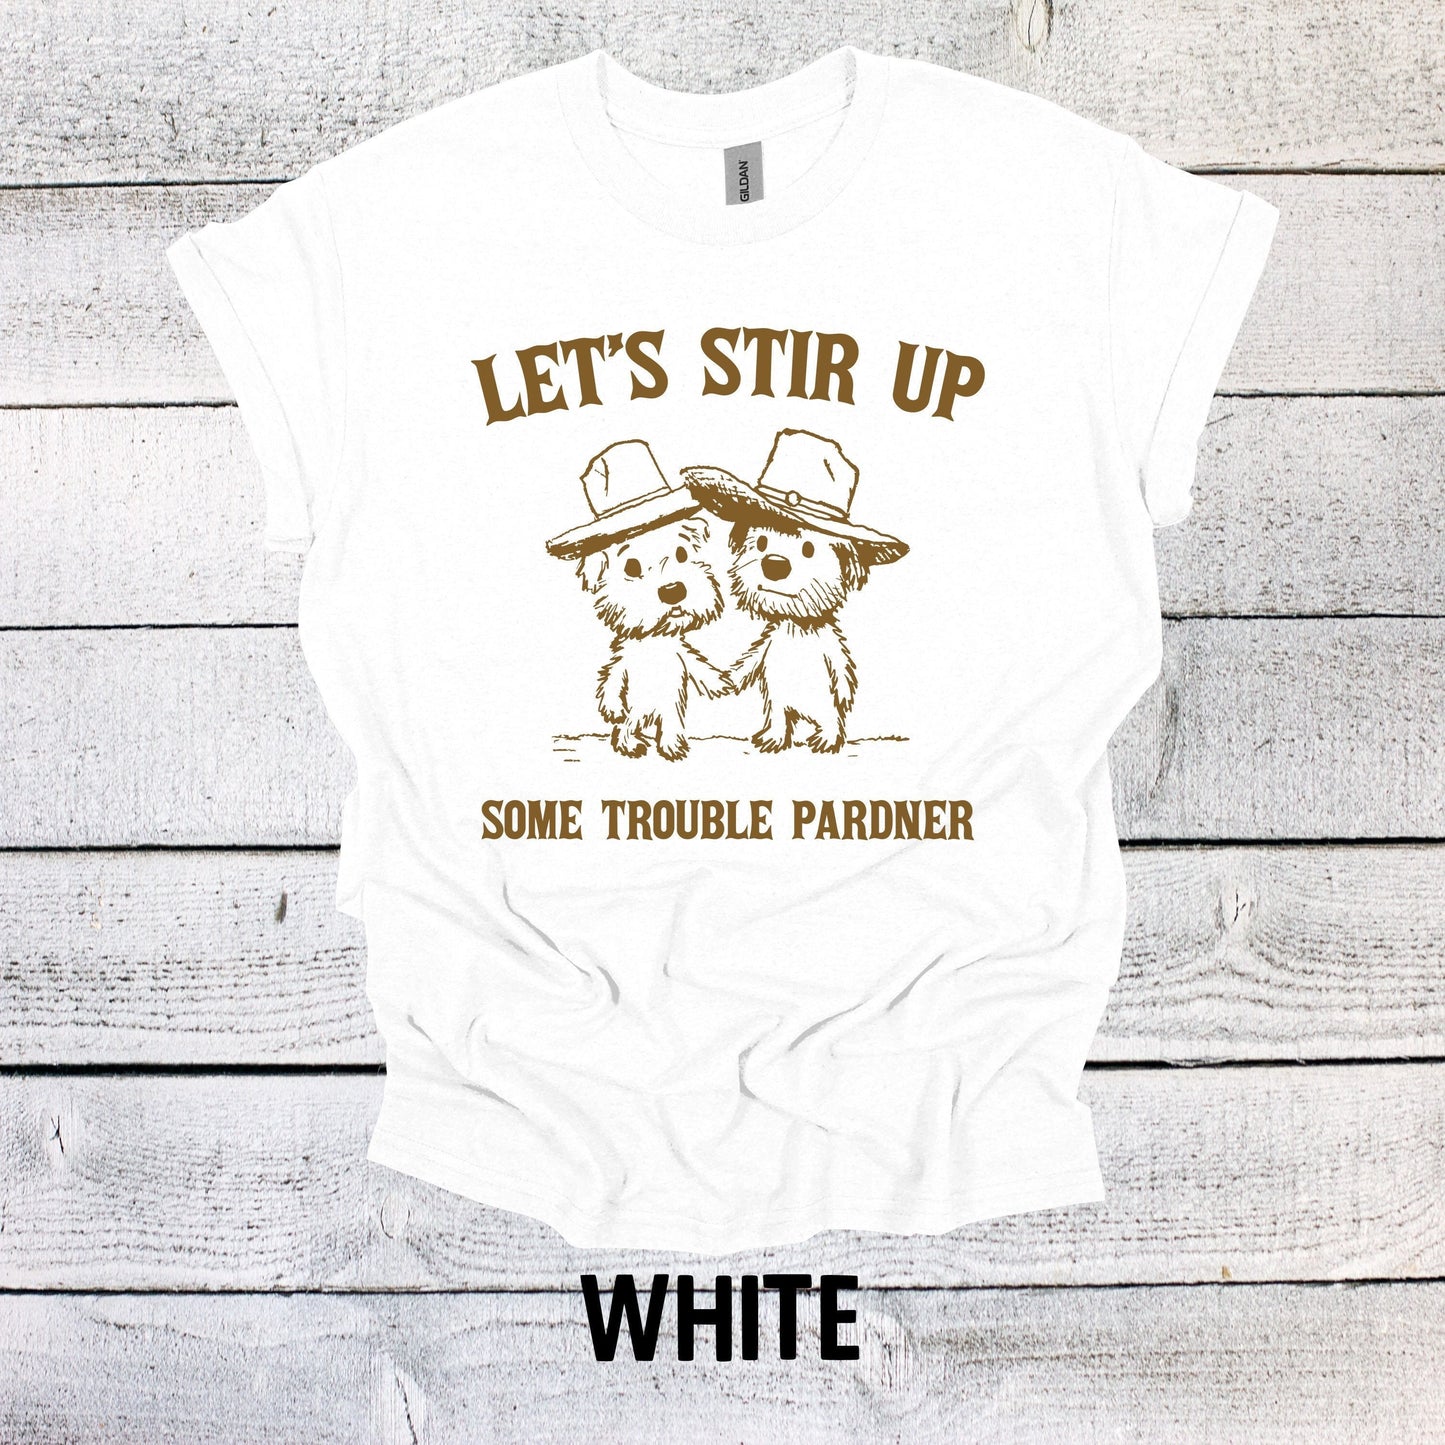 Let's Stir up Some Trouble Pardner Shirt, Puppies Graphic Shirt Vintage Funny Shirt Nostalgia Shirt Cotton Shirt Minimalist Shirt